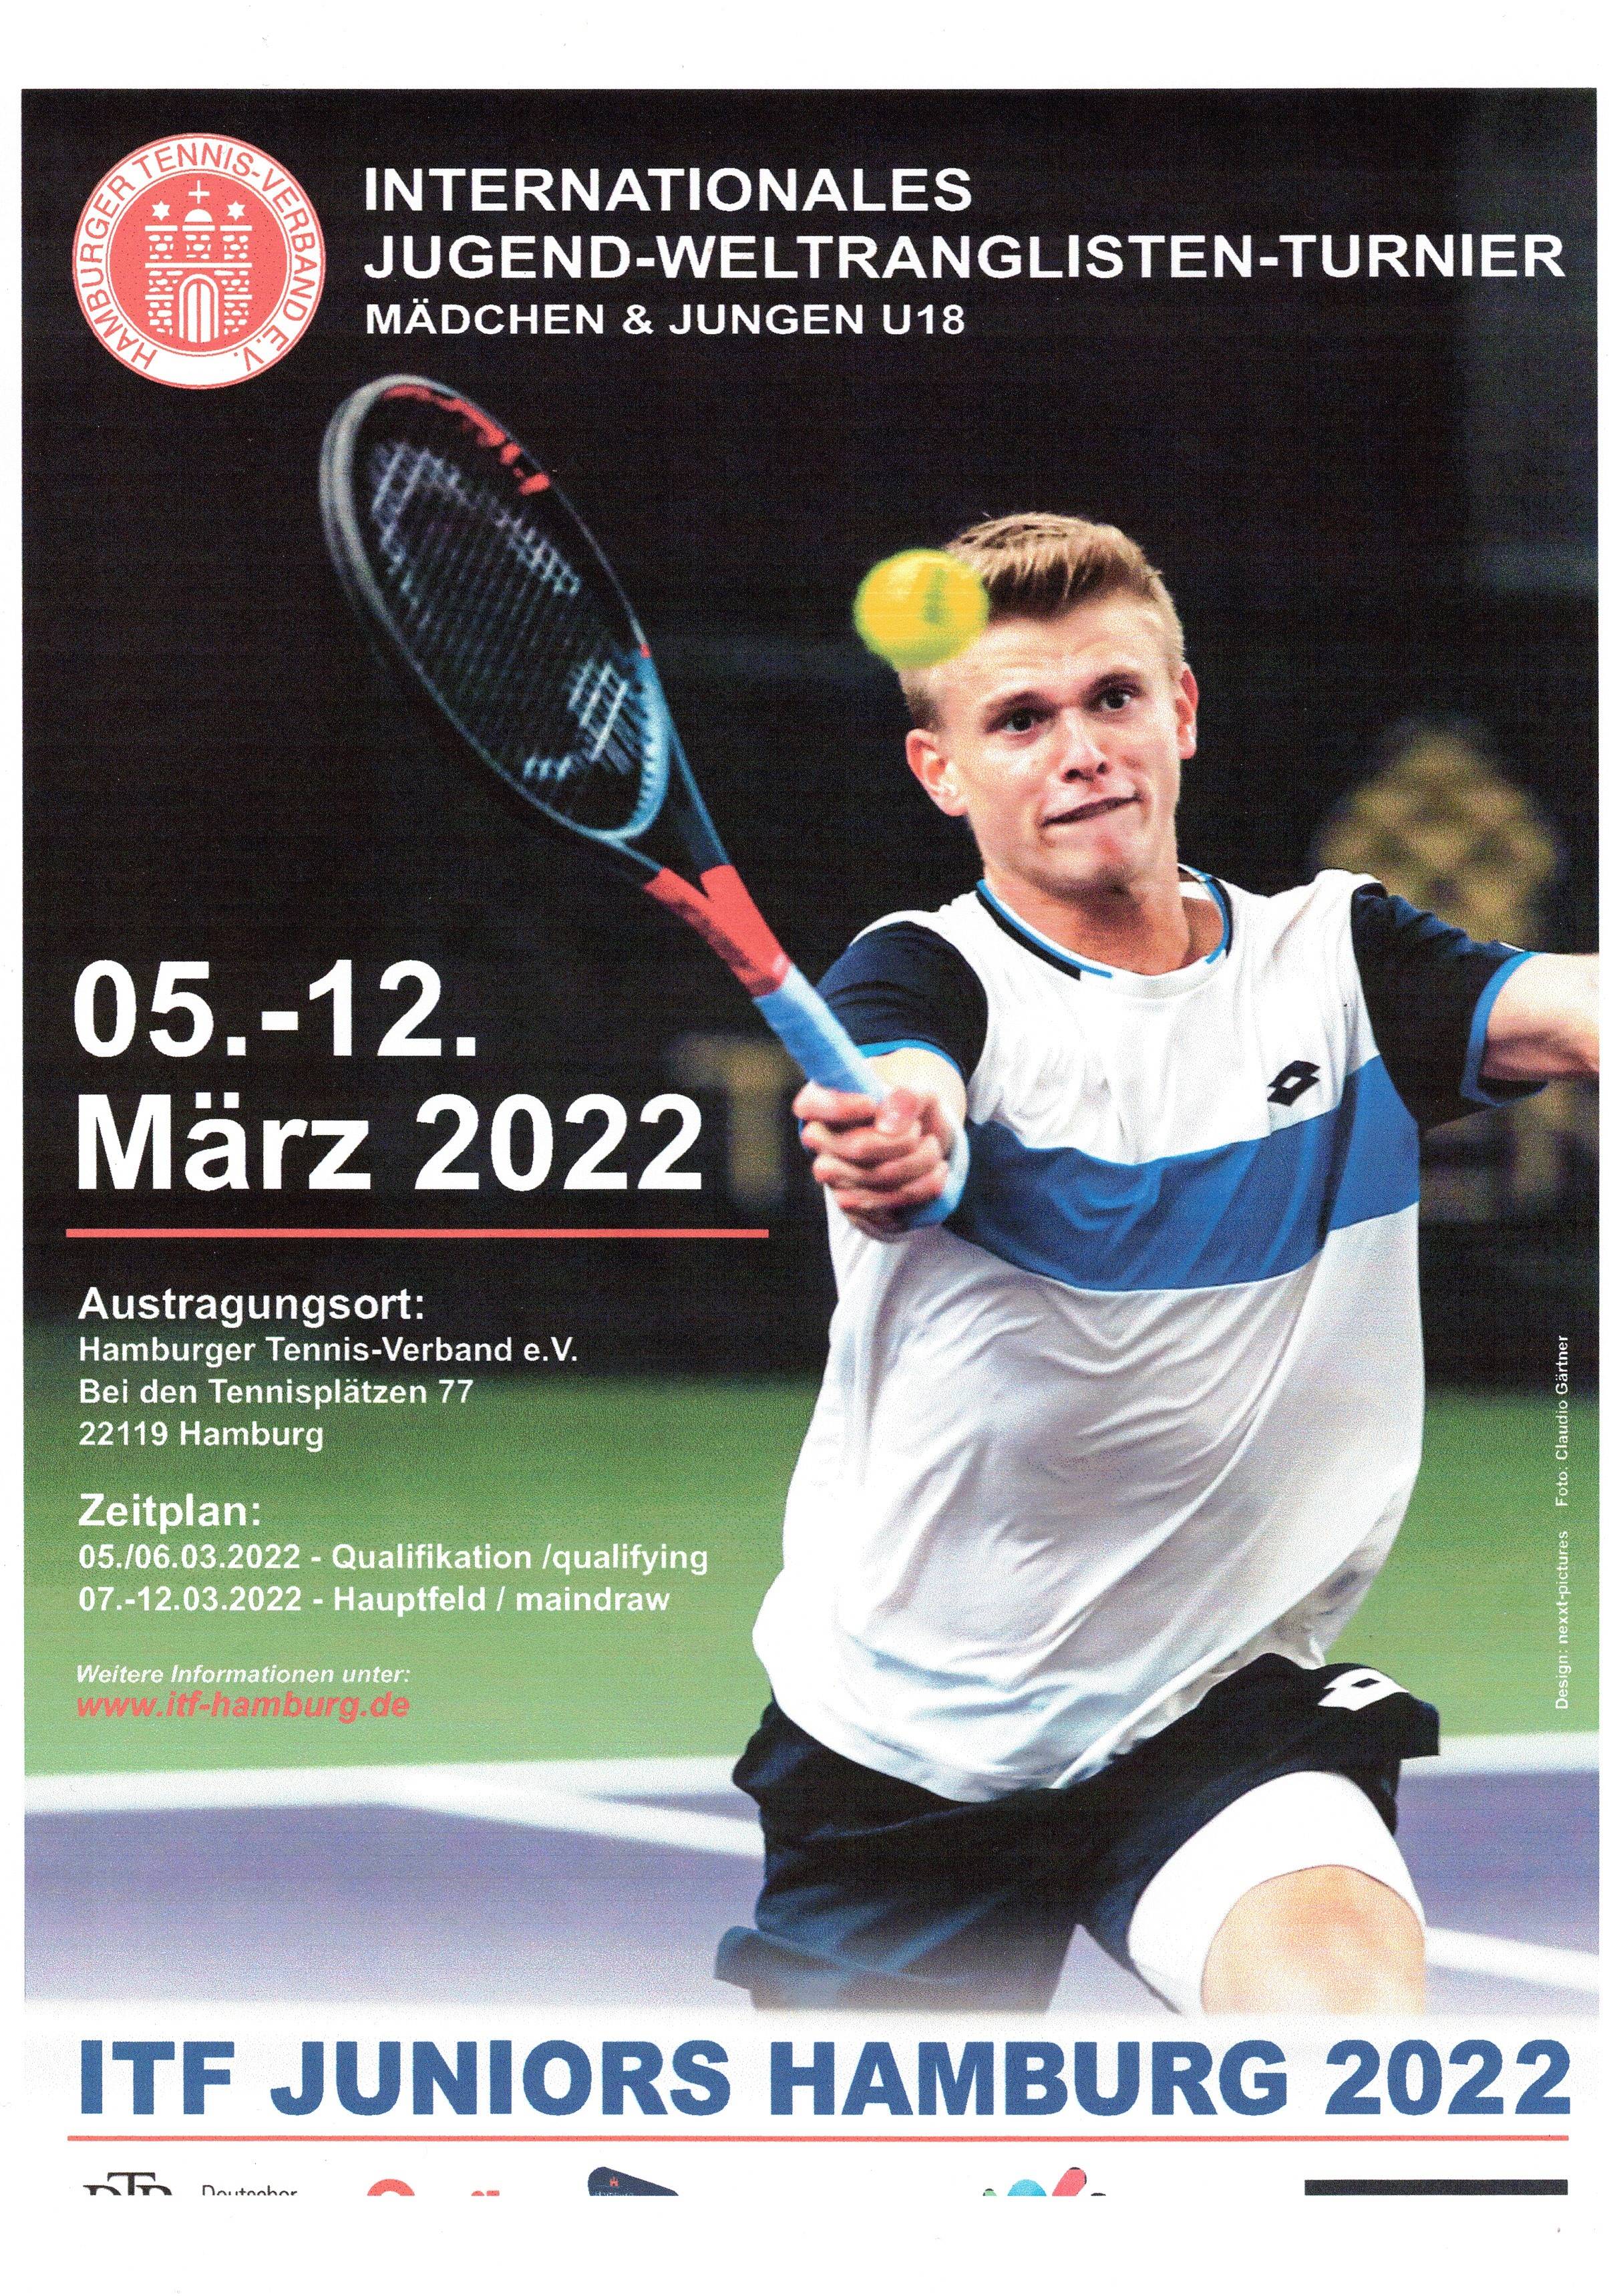 ITF JUNIORS HAMBURG 2022